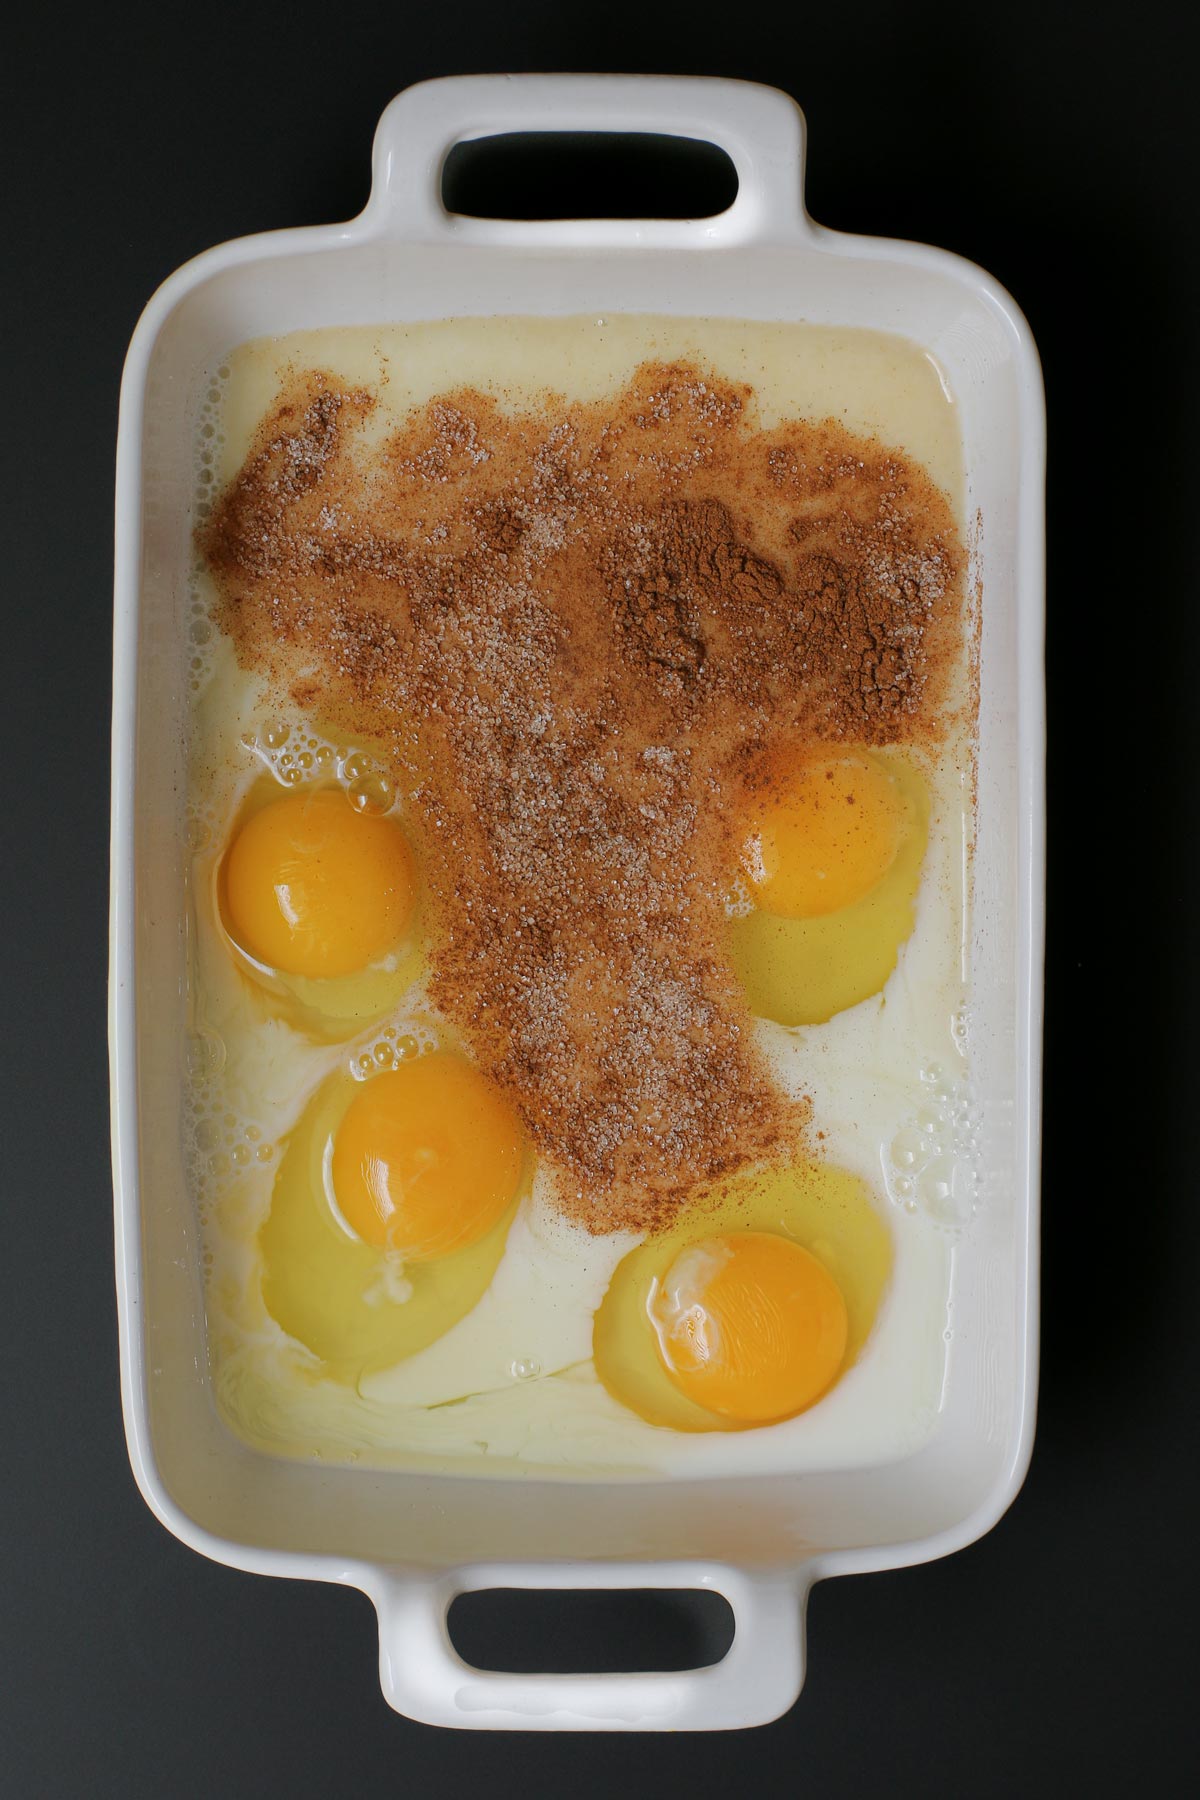 eggs, milk, sugar, and cinnamon in shallow dish.